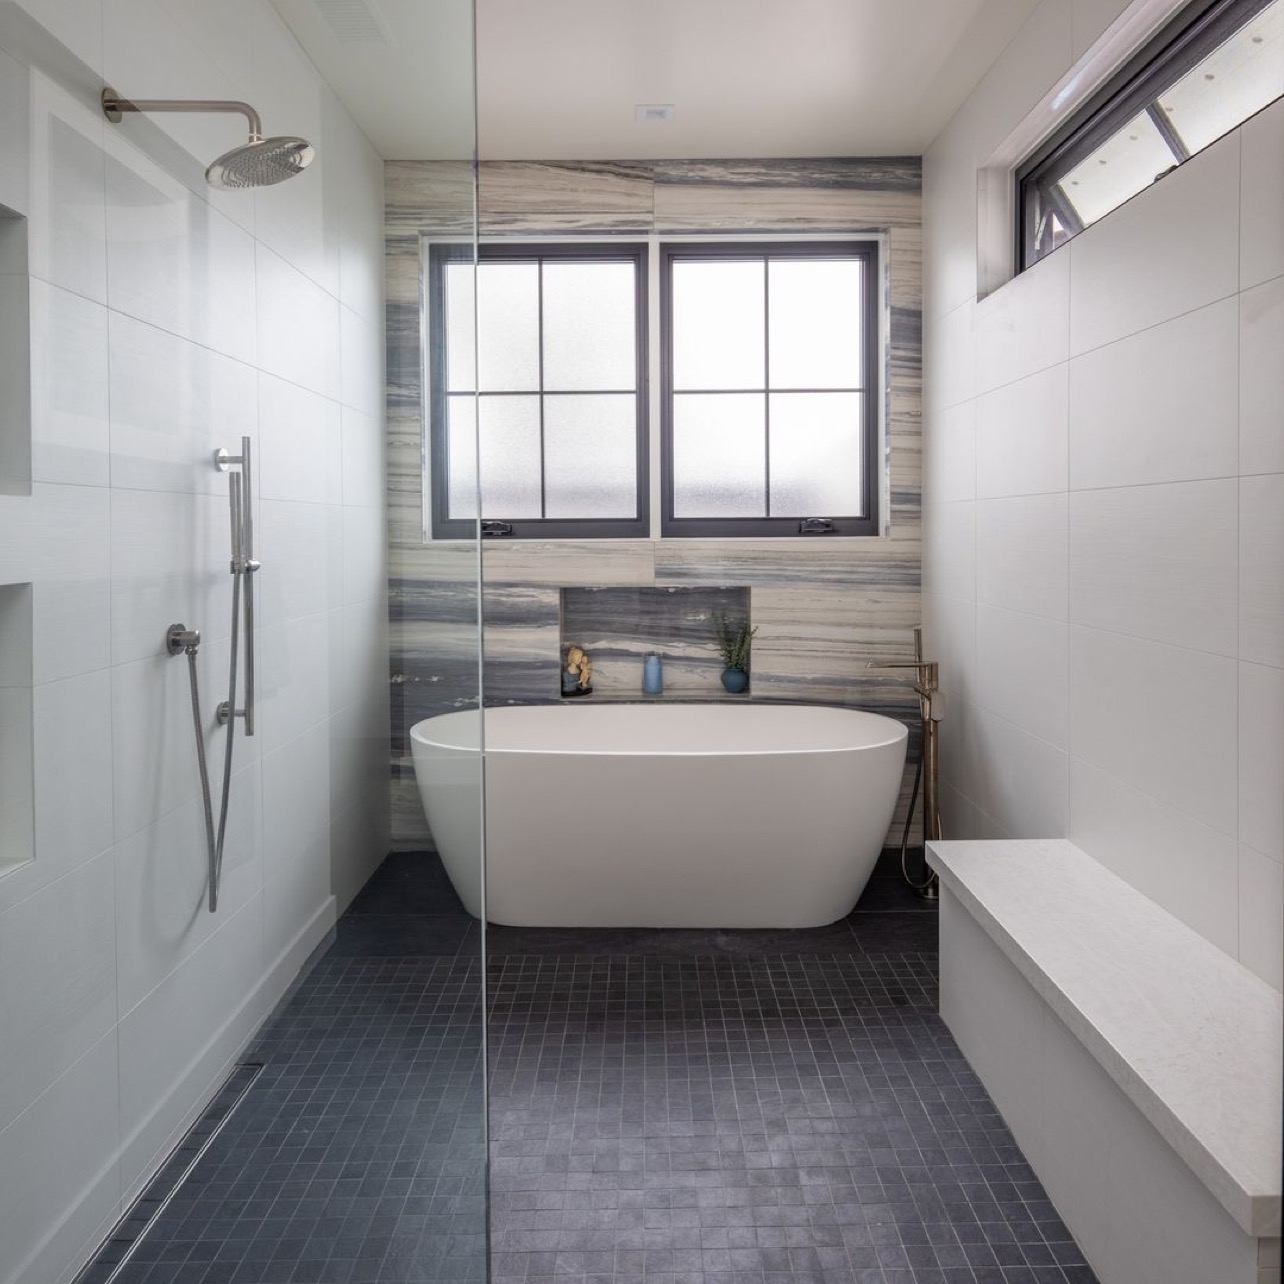 Primary bathroom wetroom with soaking tub